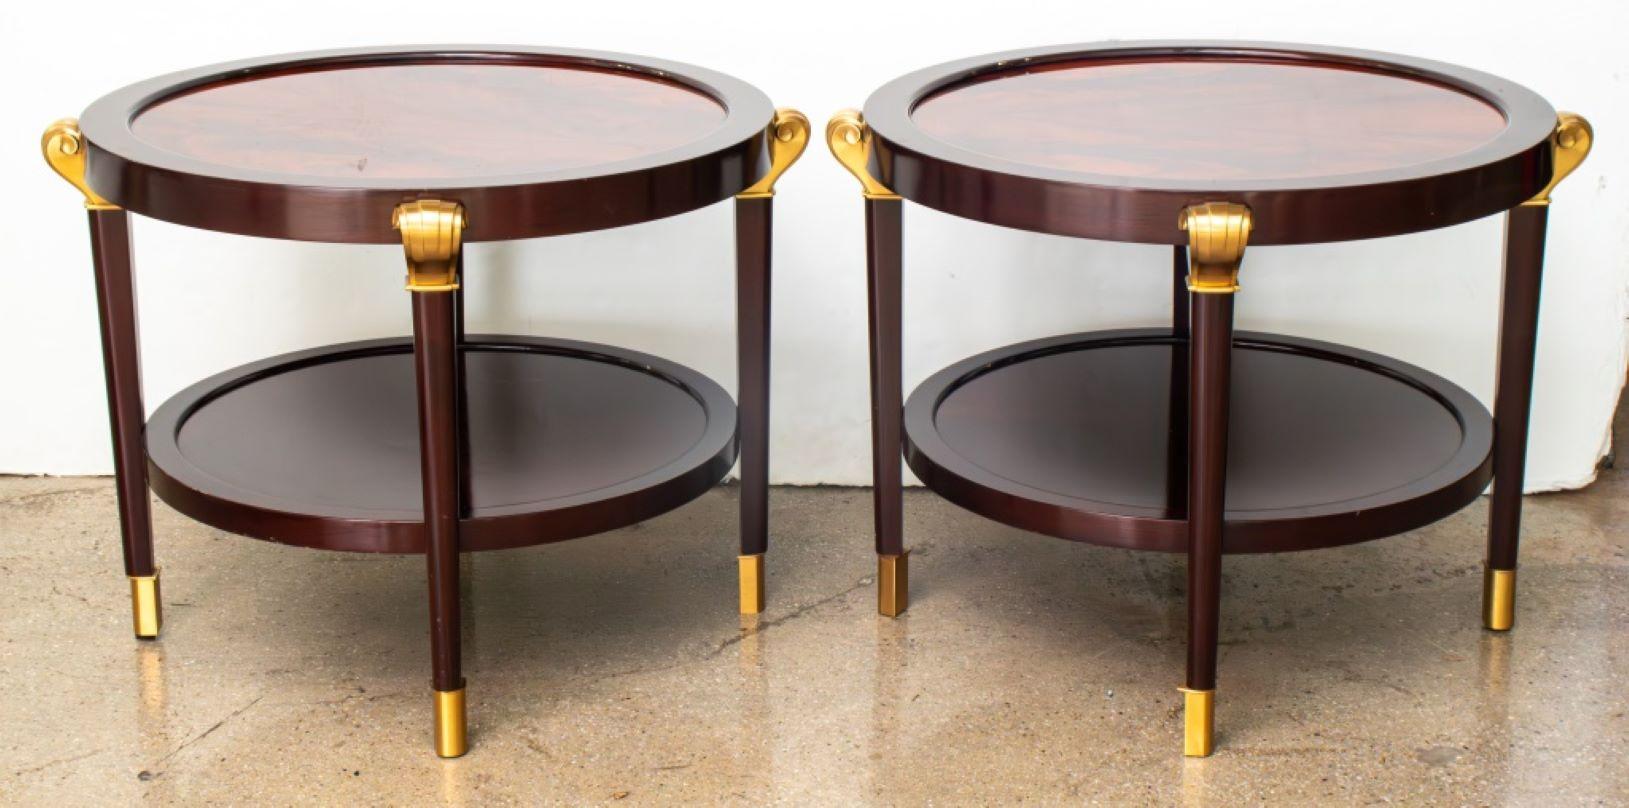 Art Deco Revival Round End Tables, Pair For Sale 3